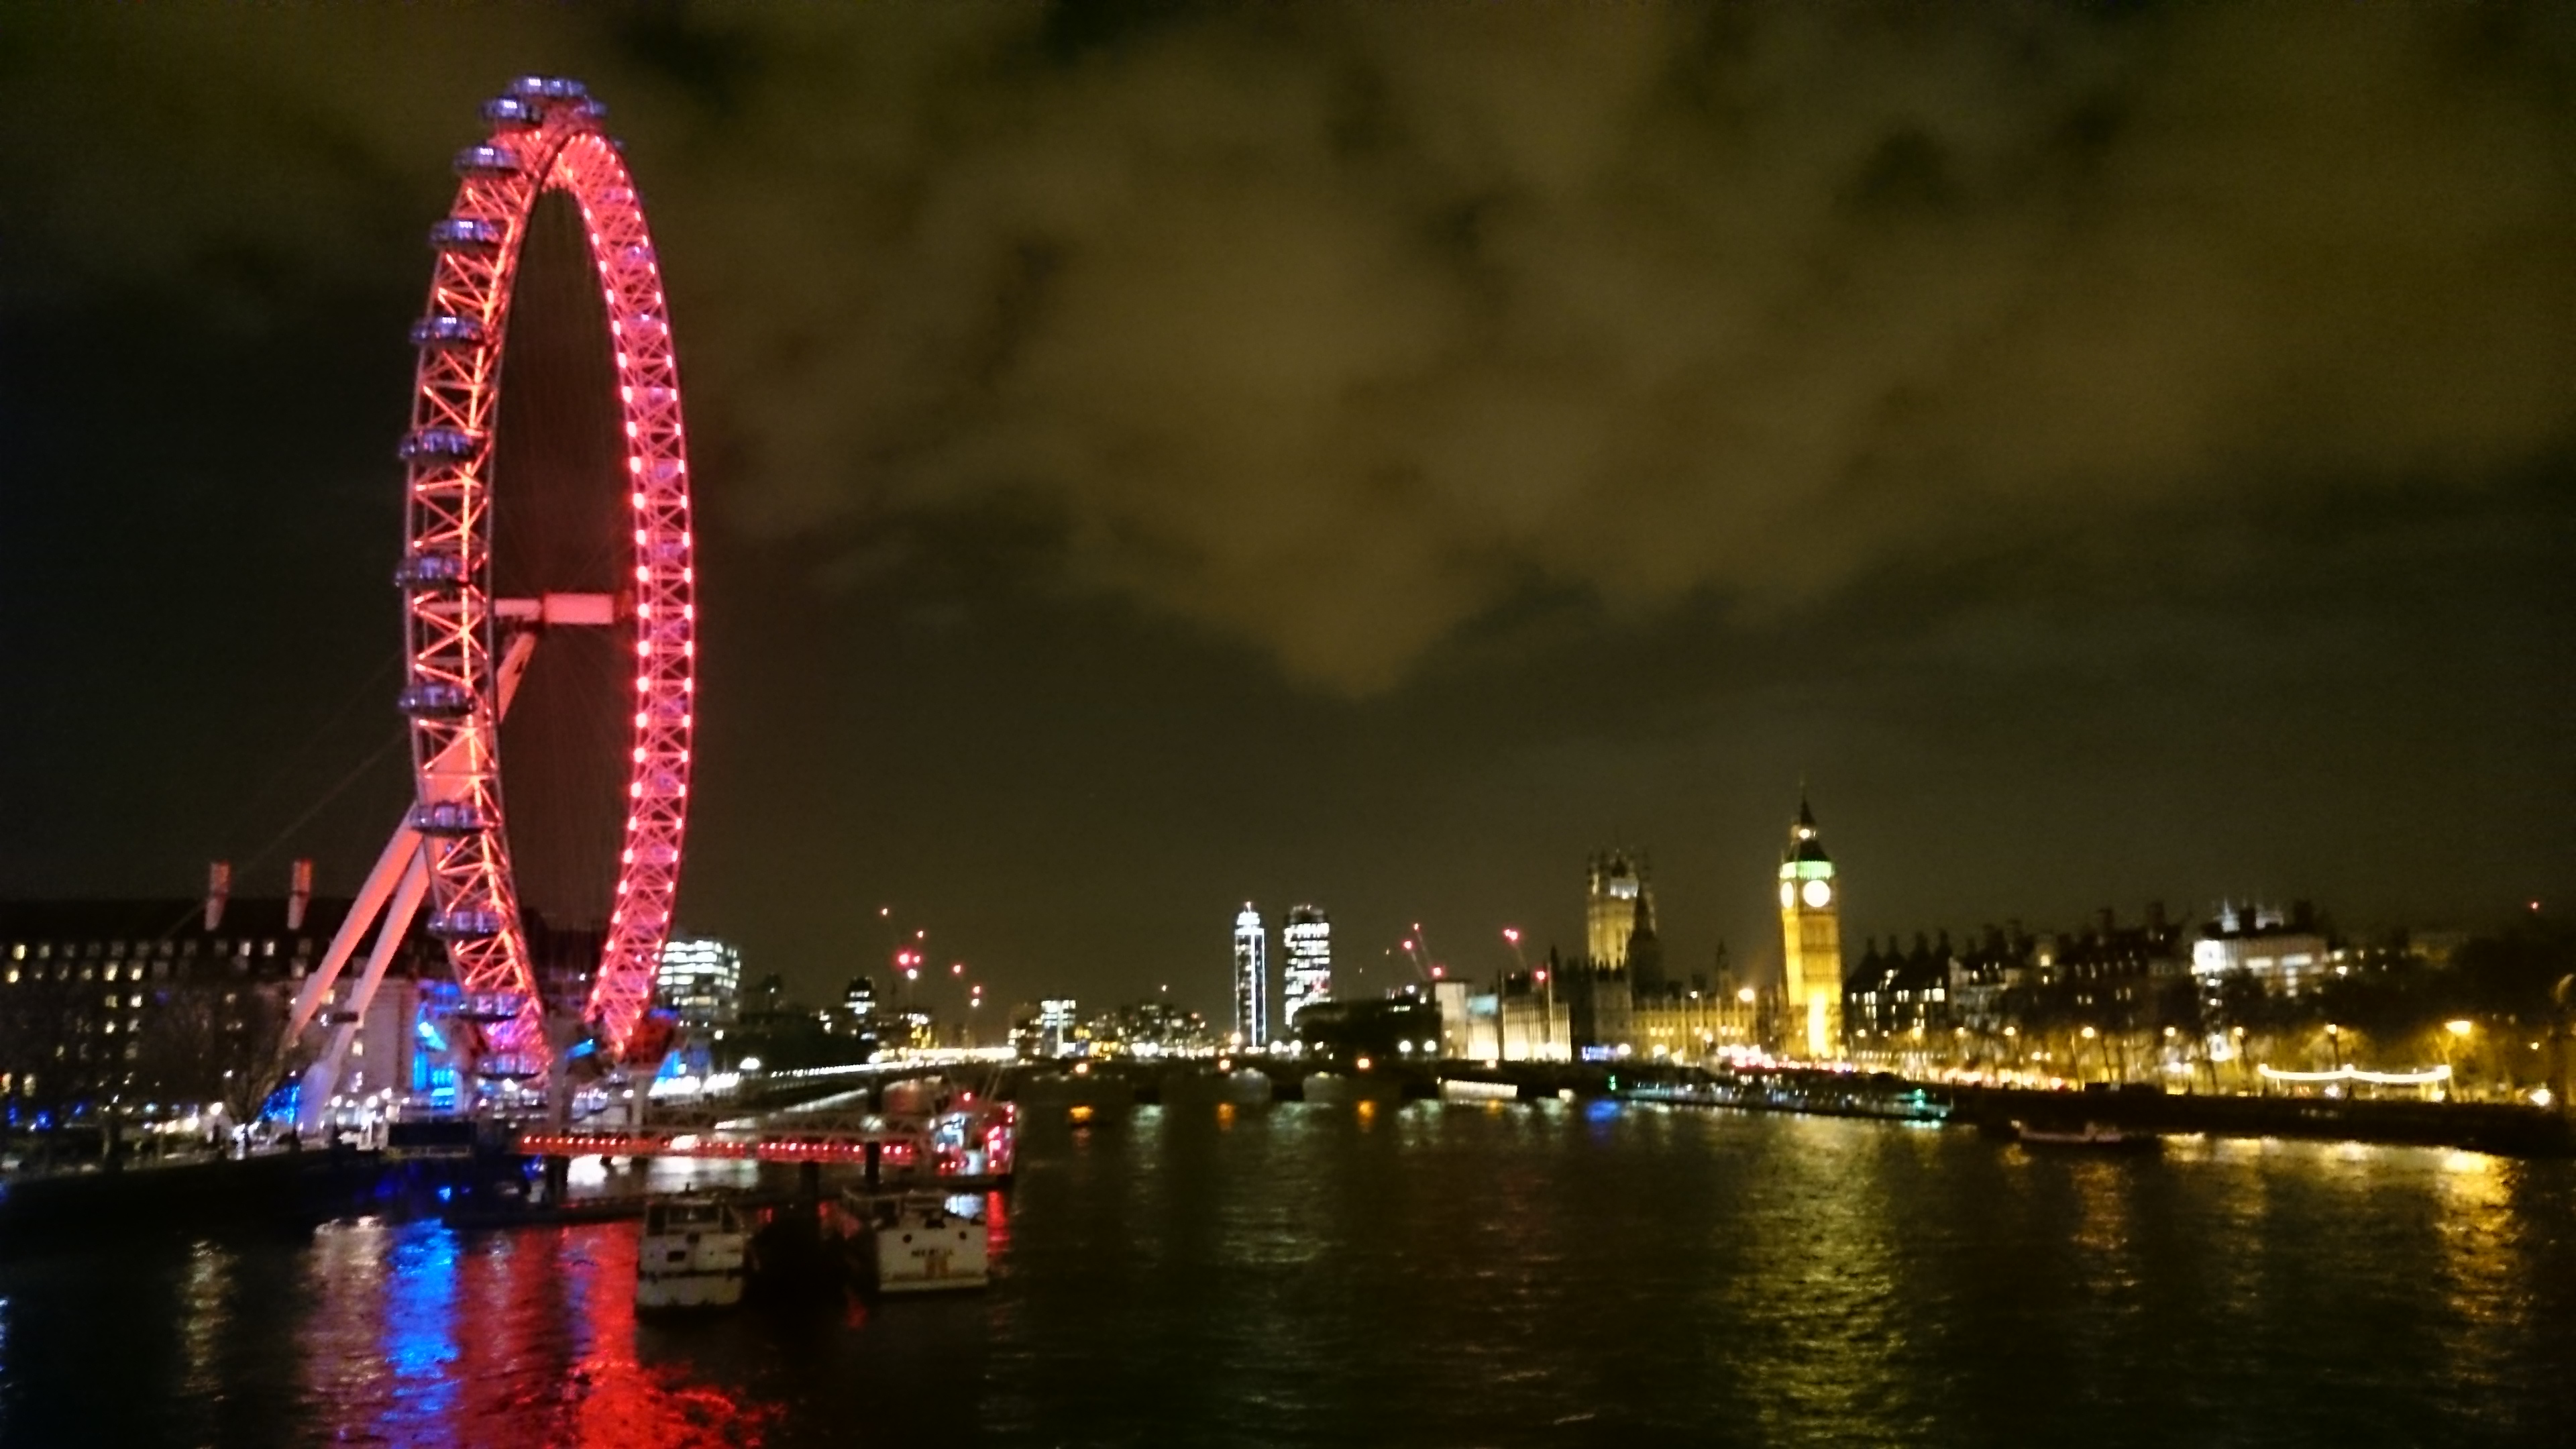 dsc 0874 - Una subida al London Eye de noche